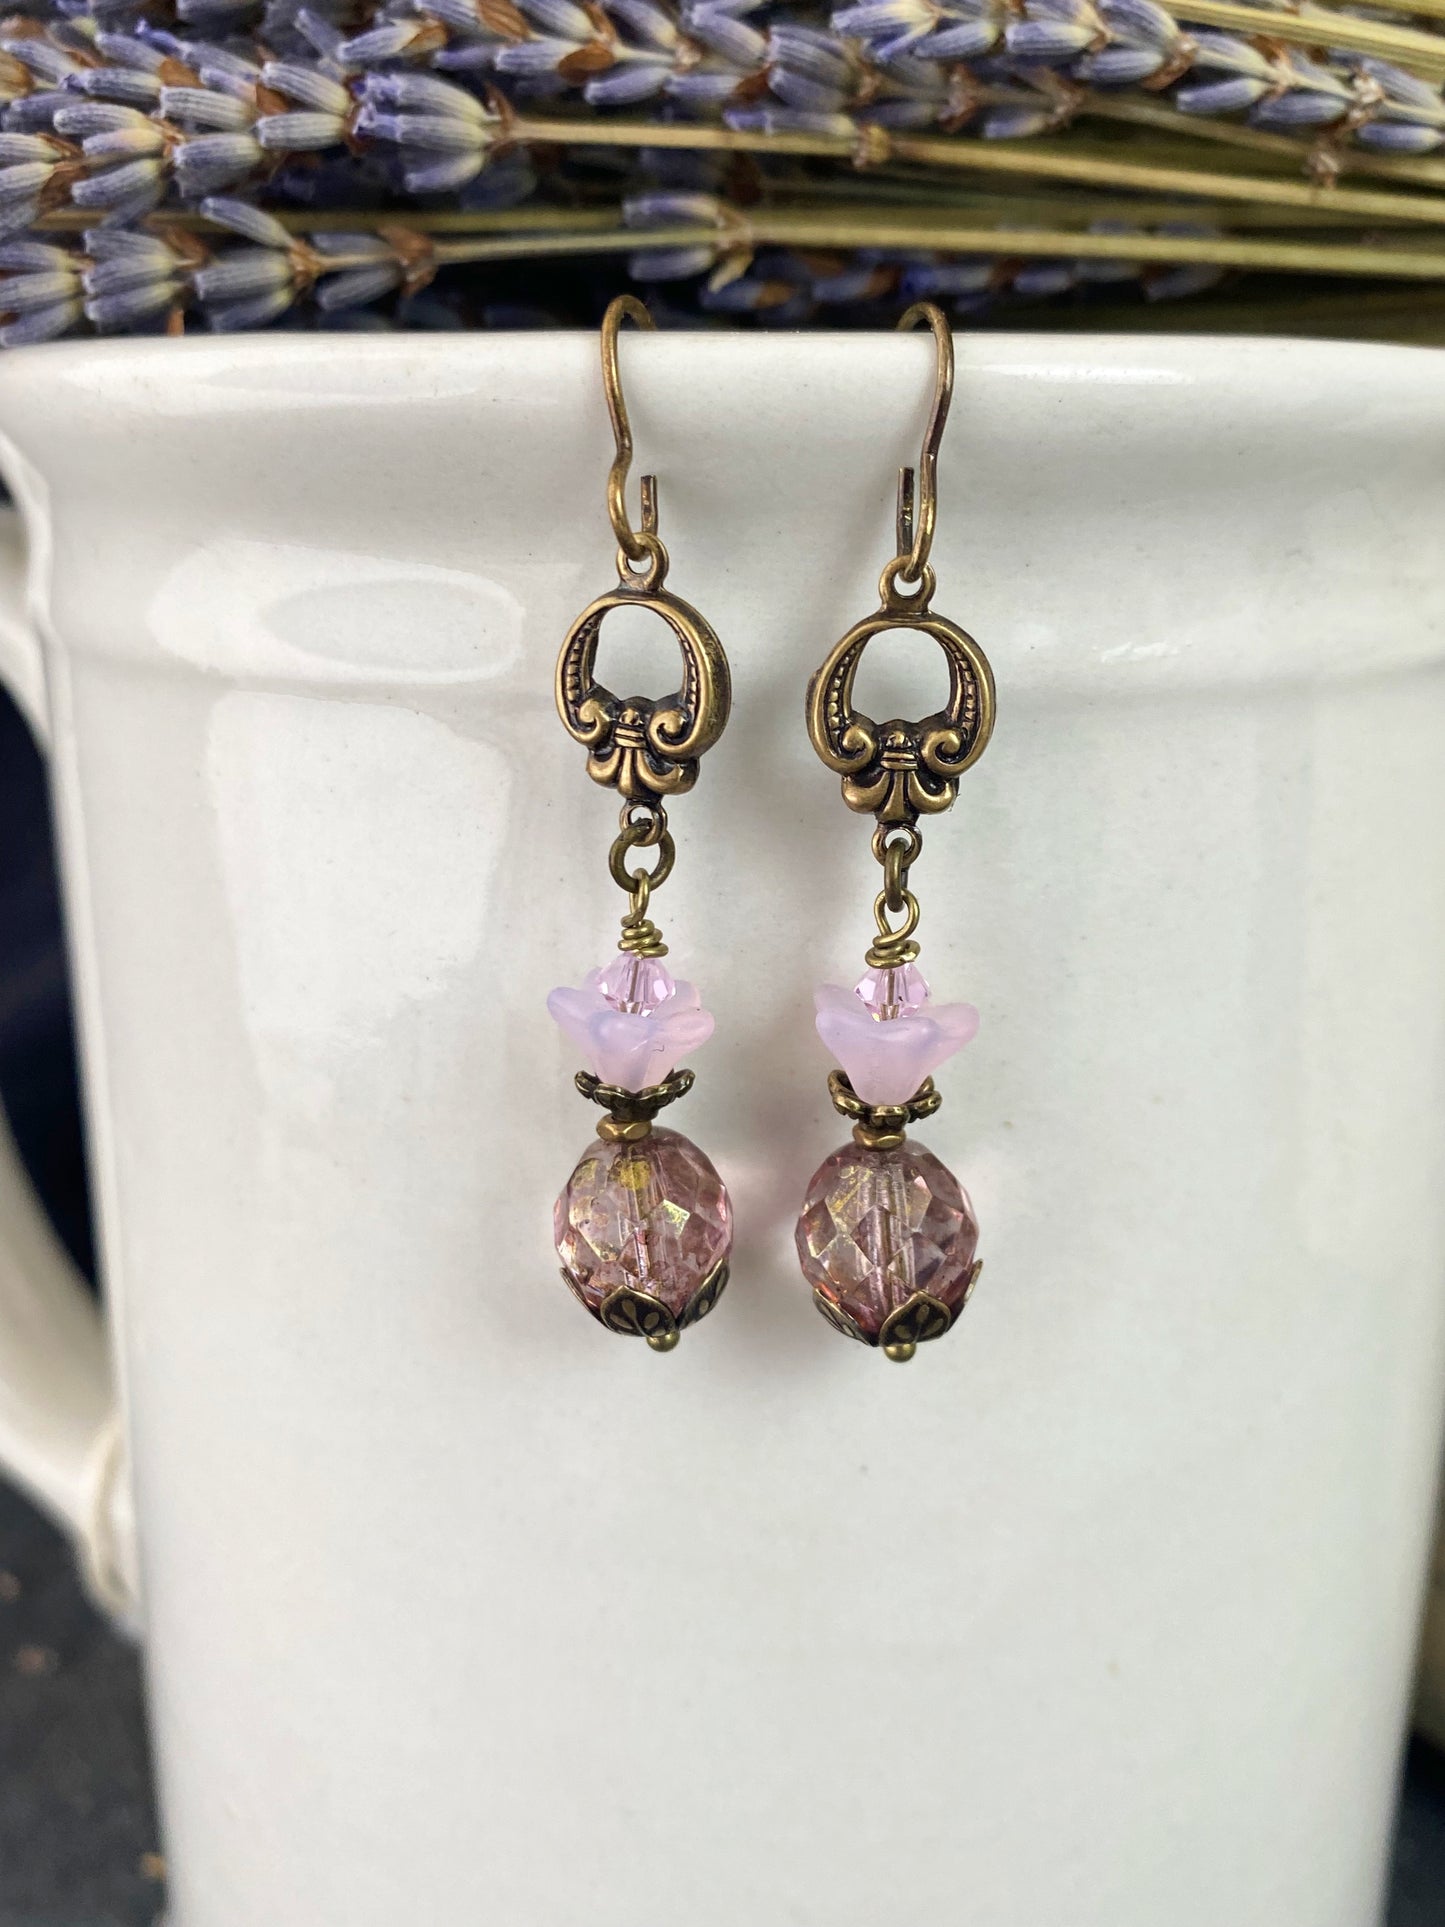 Pink Czech glass, bronze flower bead caps, and bronze metal earrings.